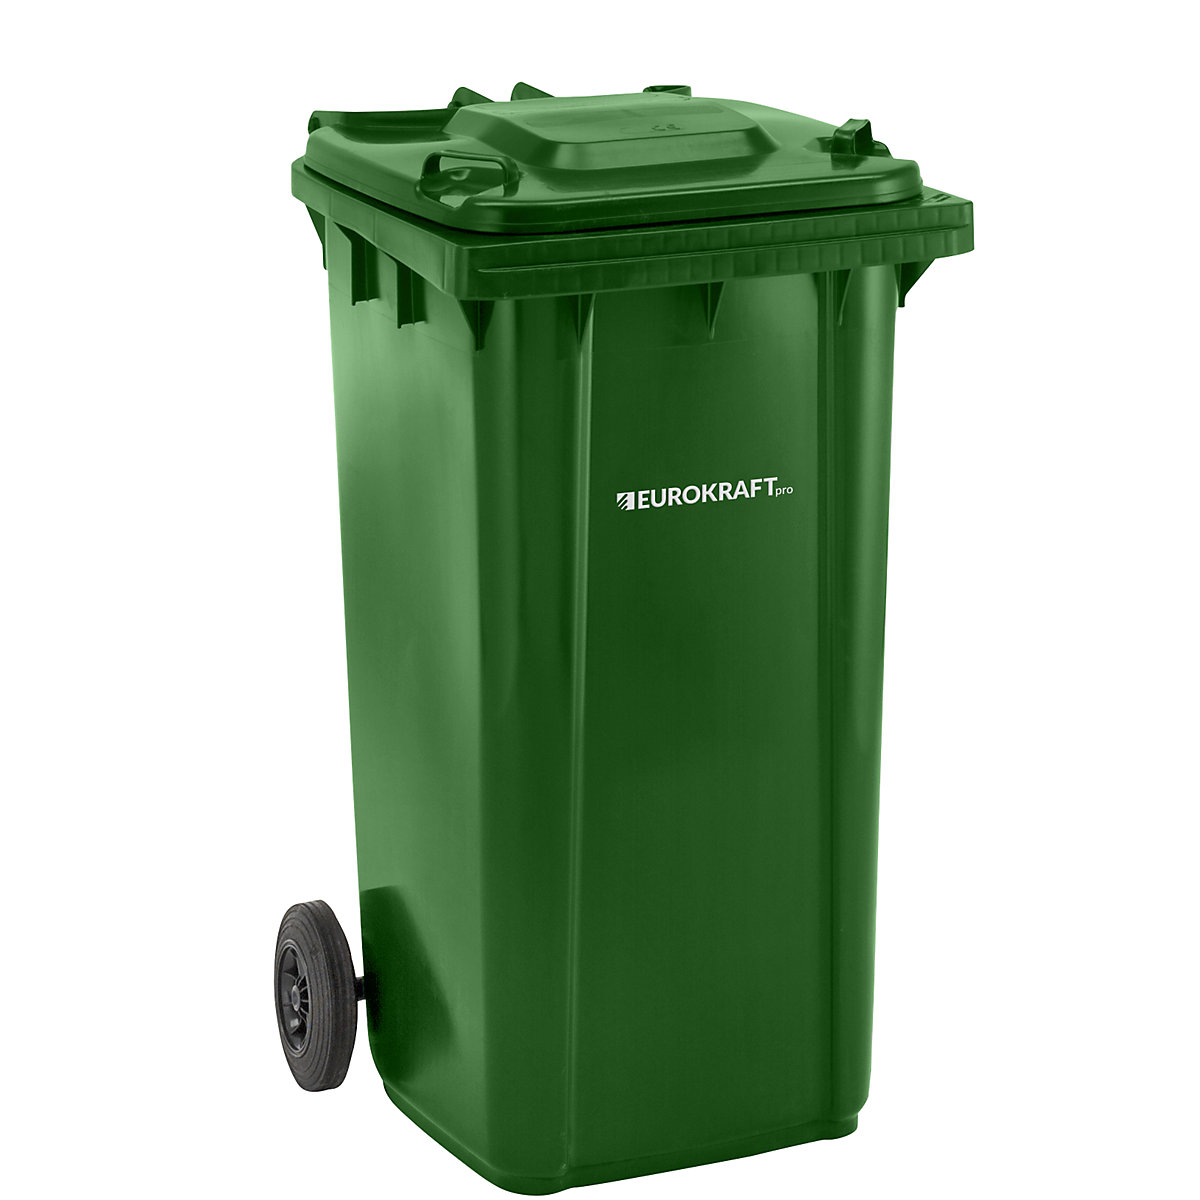 Kanta za smeće od plastike DIN EN 840 – eurokraft pro, volumen 240 l, ŠxVxD 580 x 1100 x 740 mm, u zelenoj boji-7